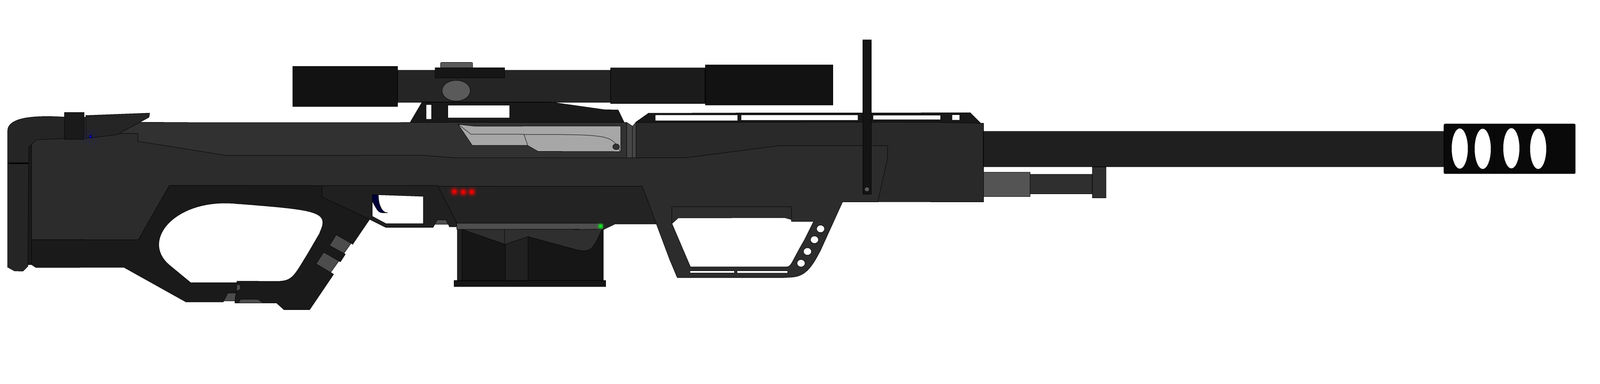 Future 50 Cal Sniper Rifle Design By Aspire443 On Deviantart